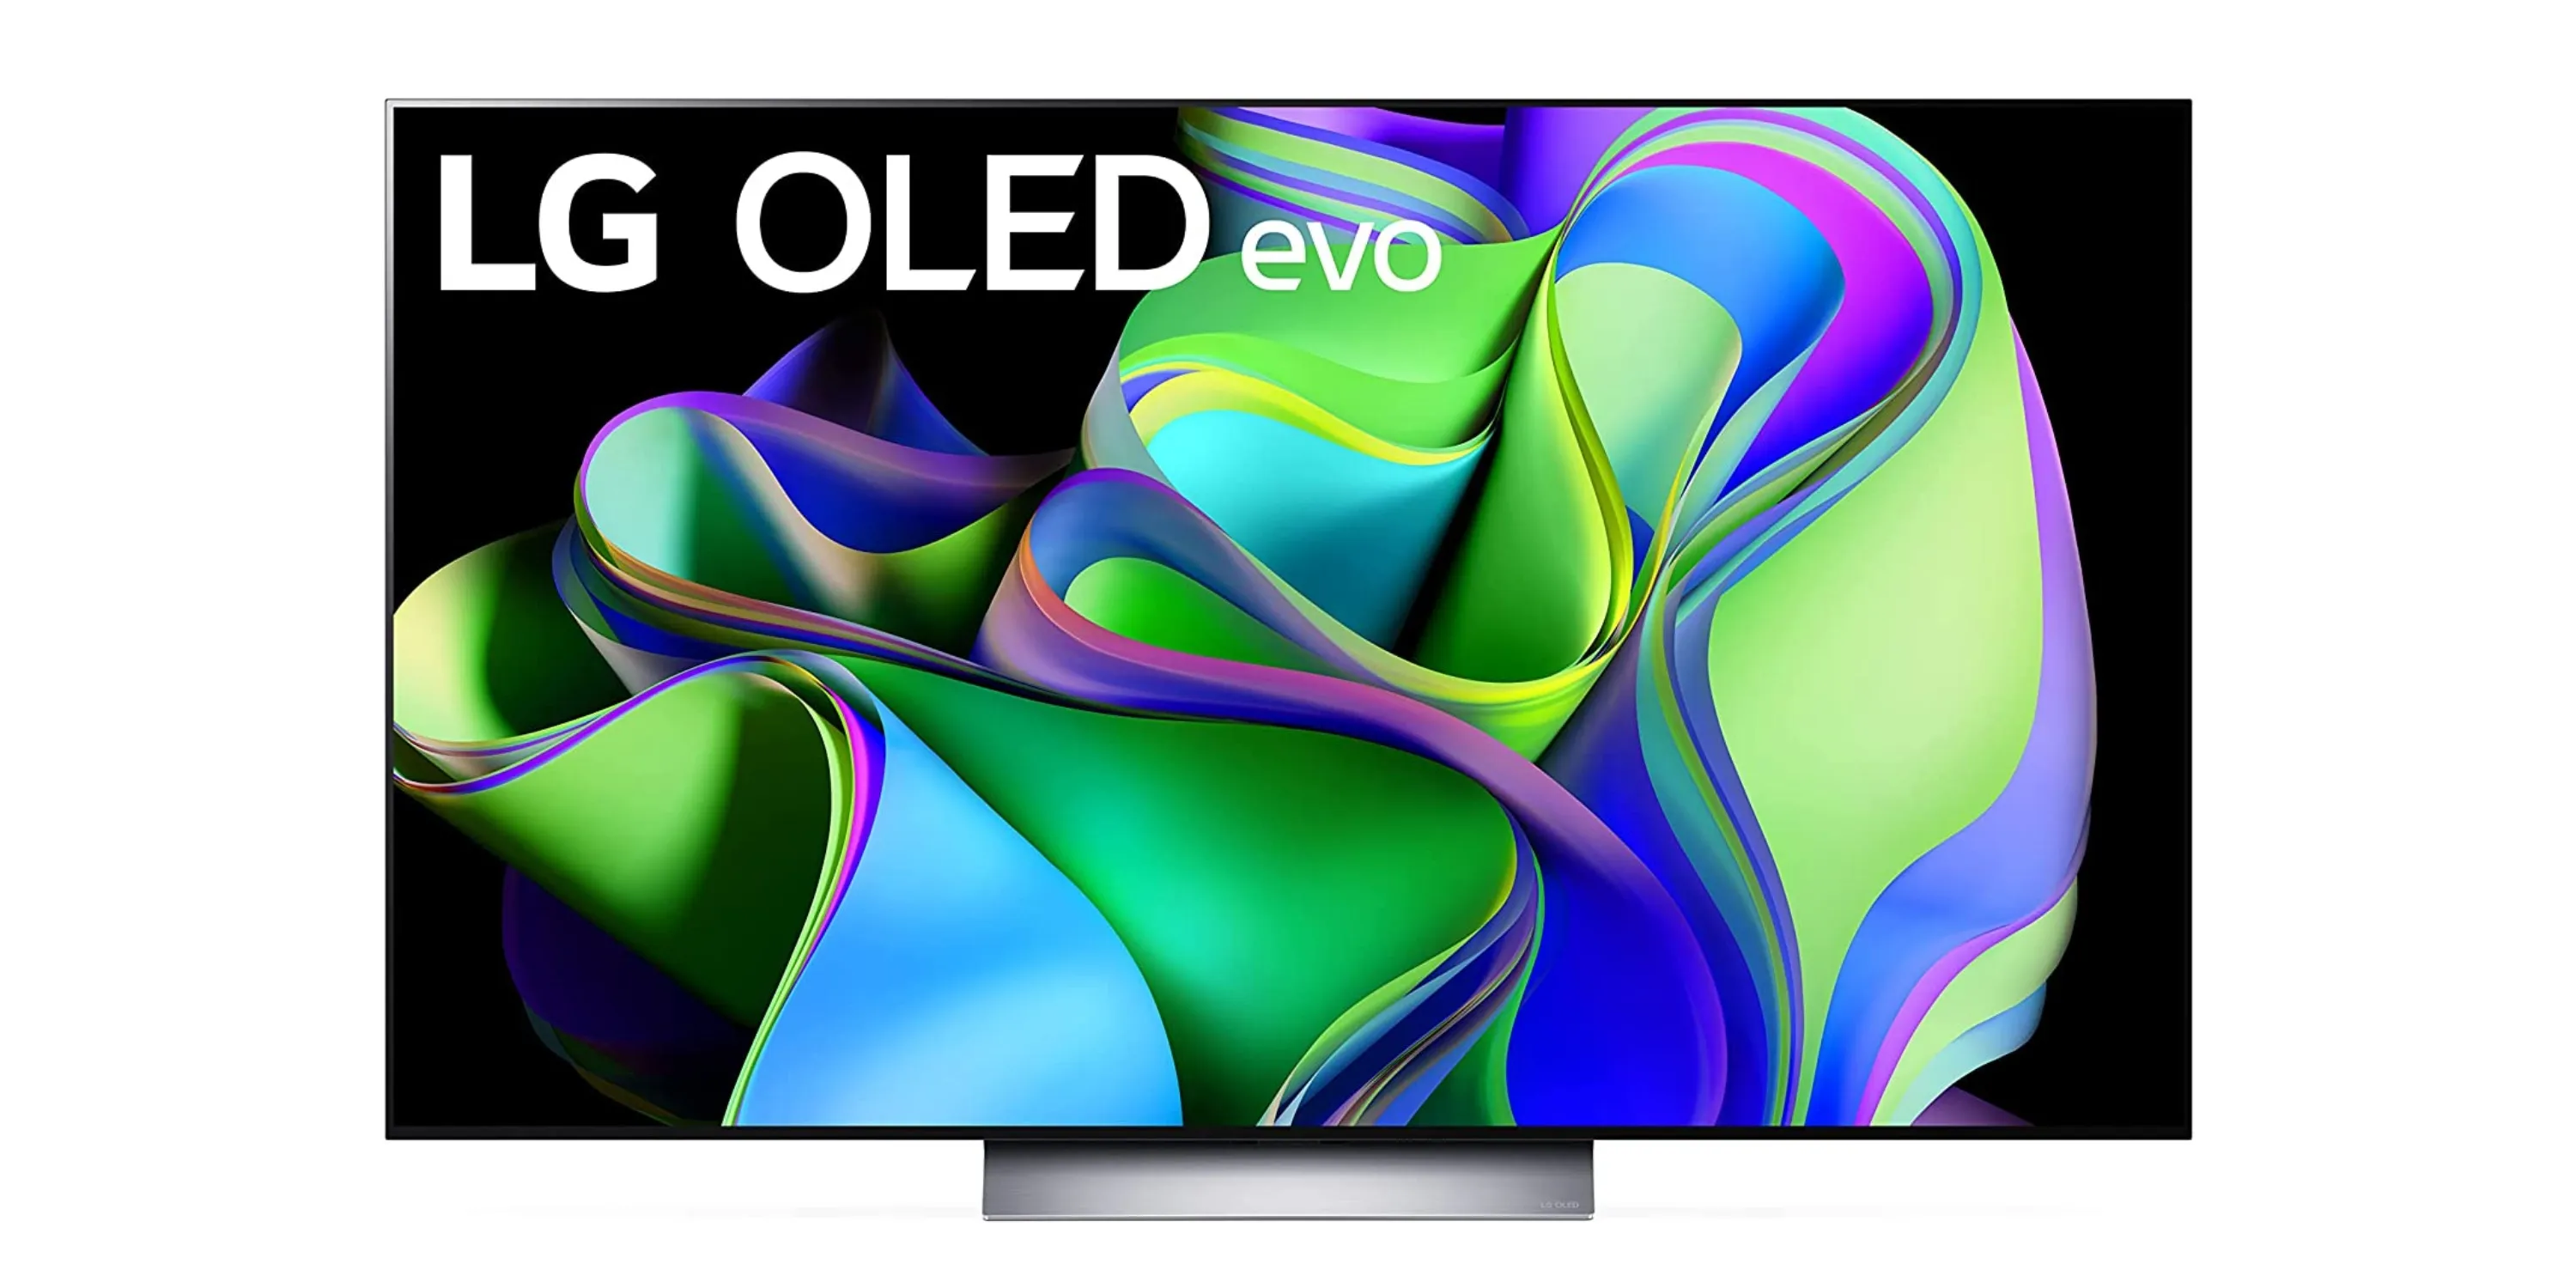 LG C3 시리즈 클래스 OLED Evo 스마트 TV